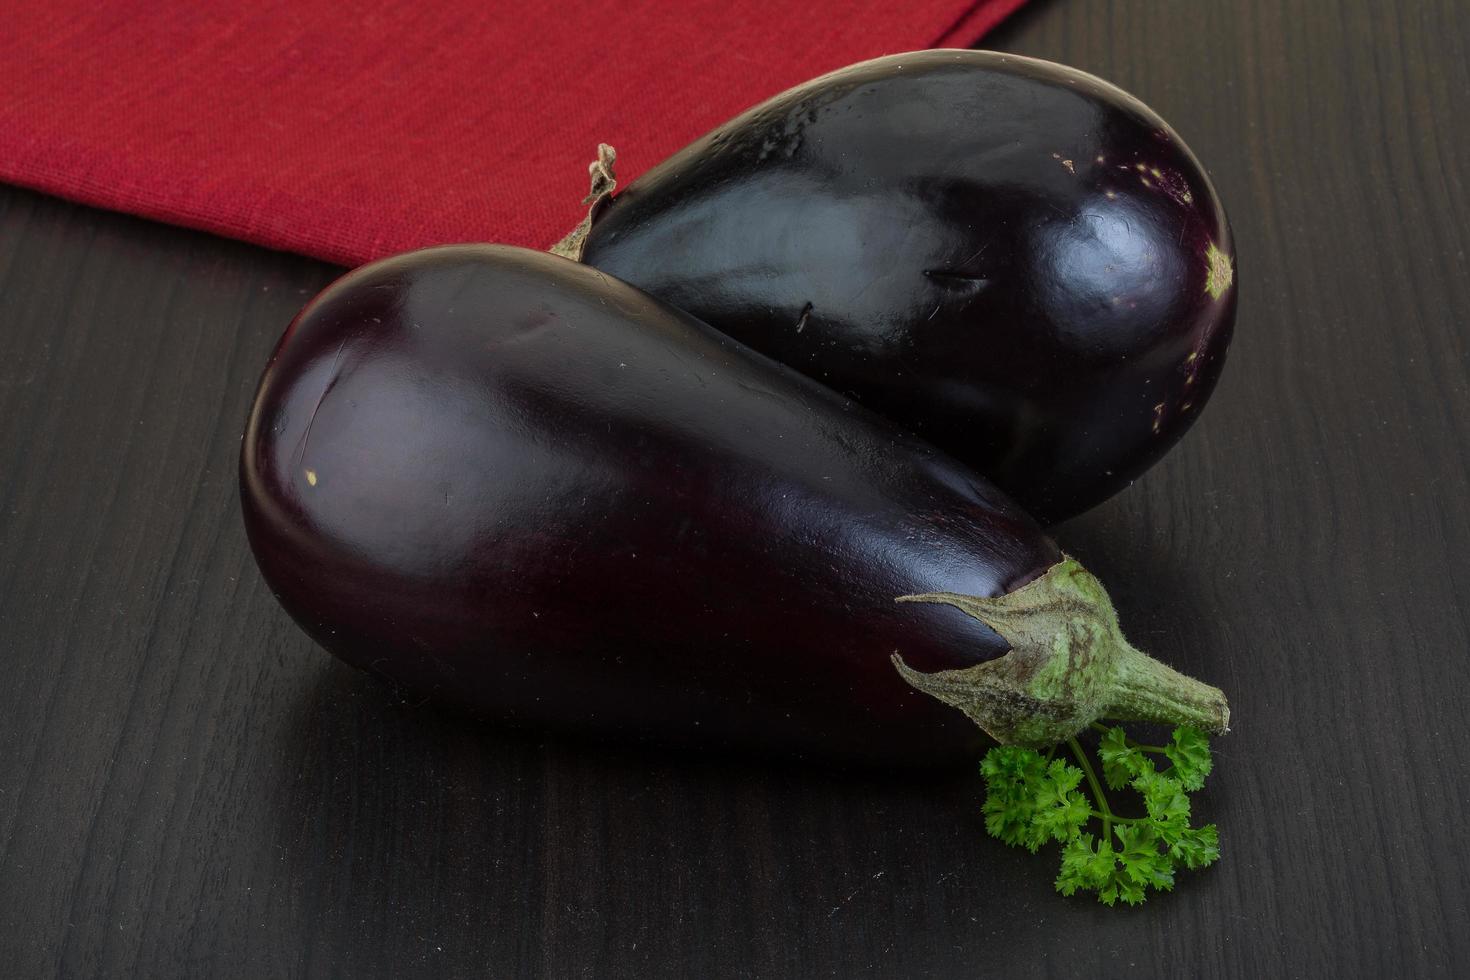 aubergine Aan houten achtergrond foto